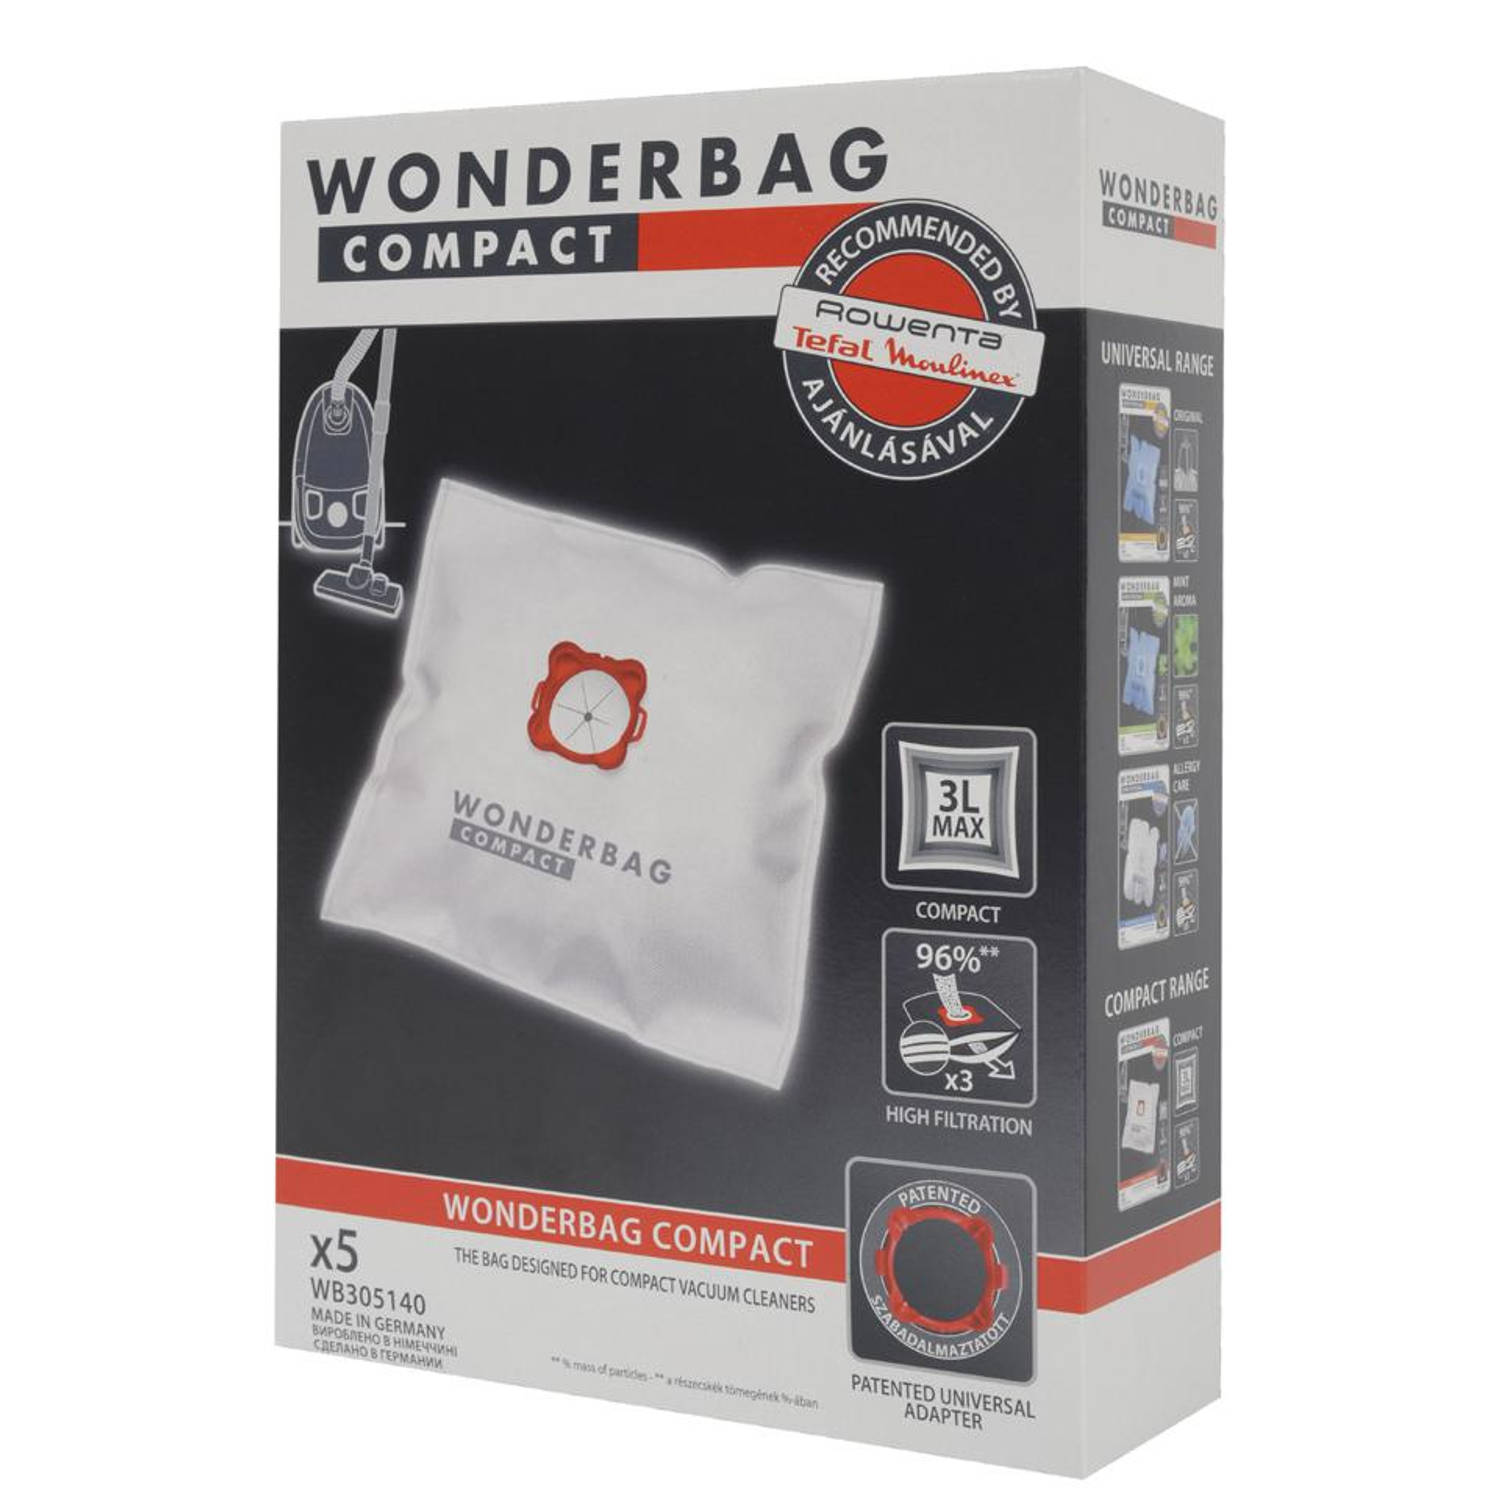 Leia bidden String string Rowenta stofzuigerzak Wonderbag Compact WB3051 - 5 stuks | Blokker